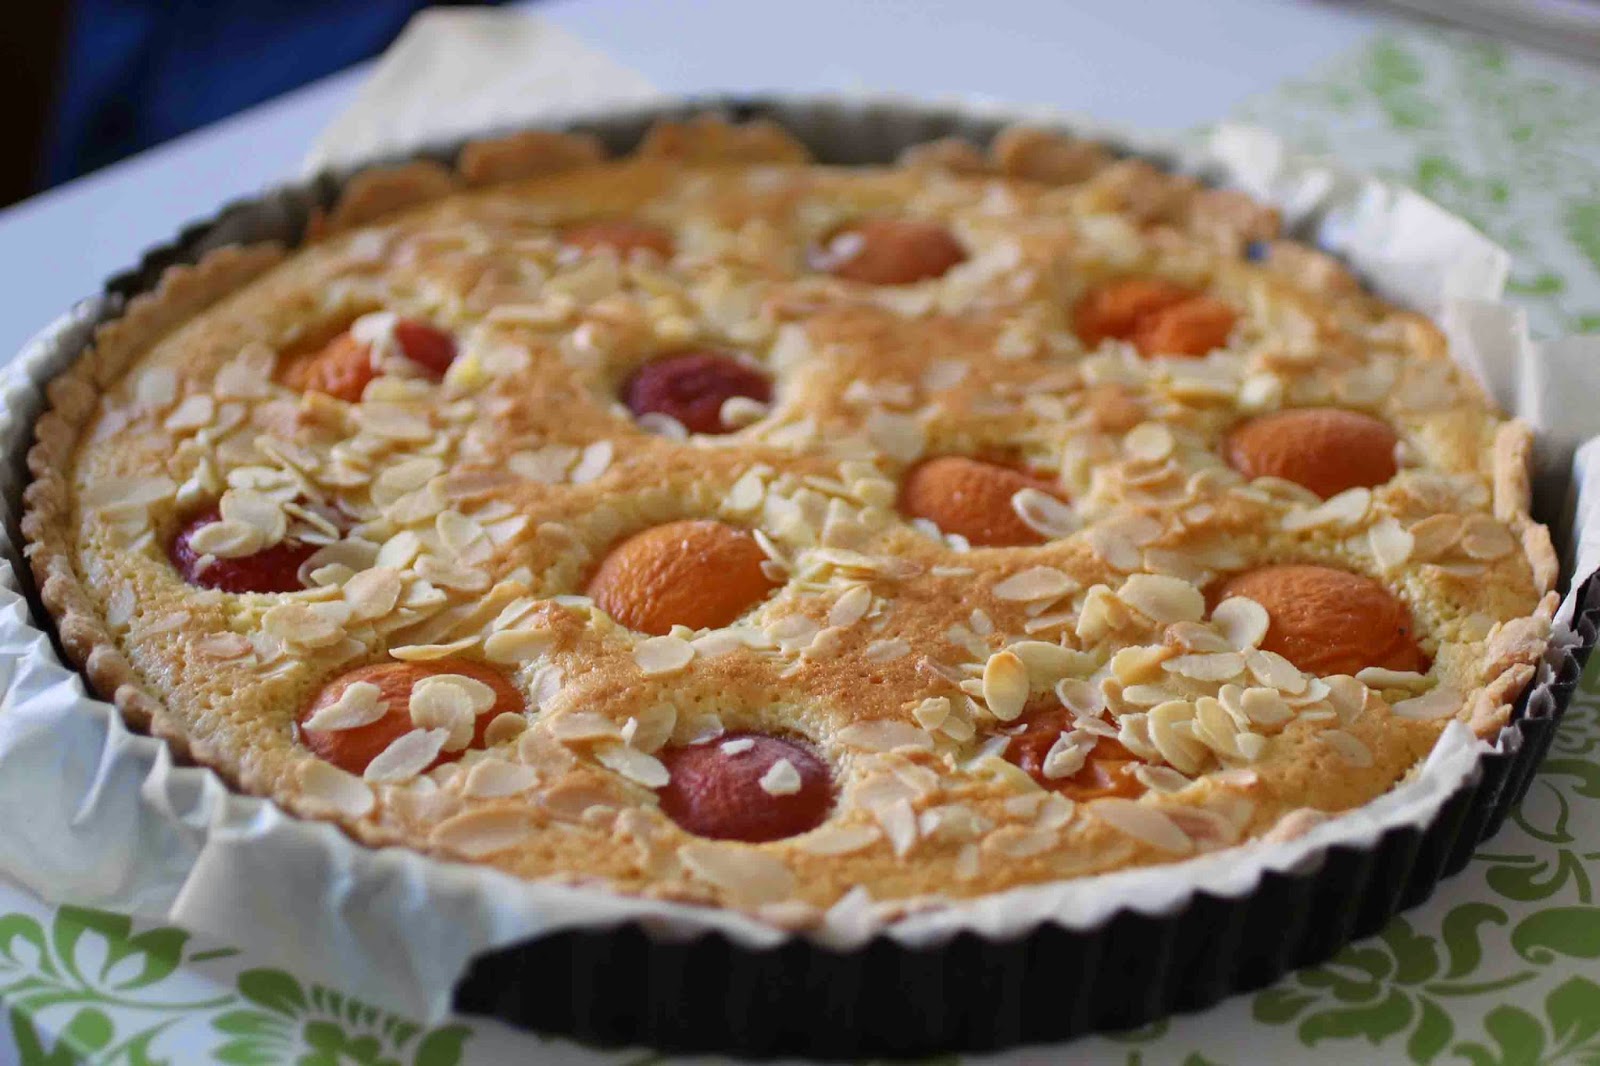 http://camilleenchocolat.blogspot.fr/2014/07/tarte-amandine-aux-abricots.html